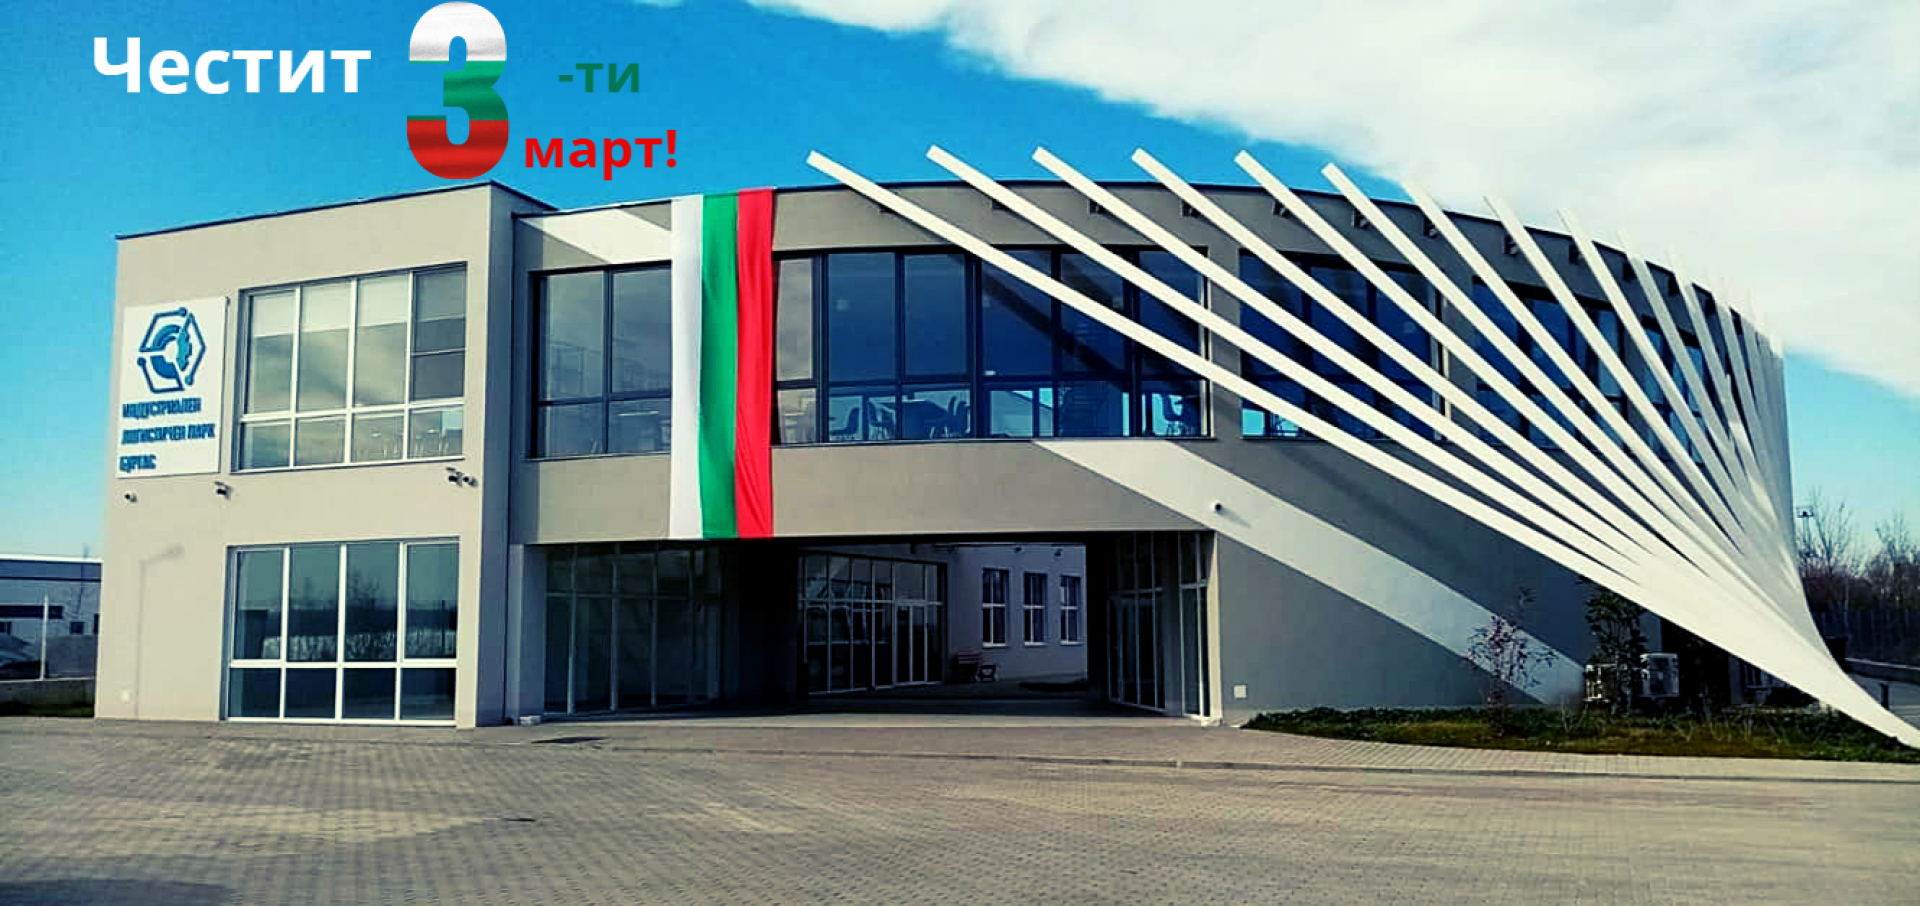 We celebrates Bulgaria’s Liberation Day